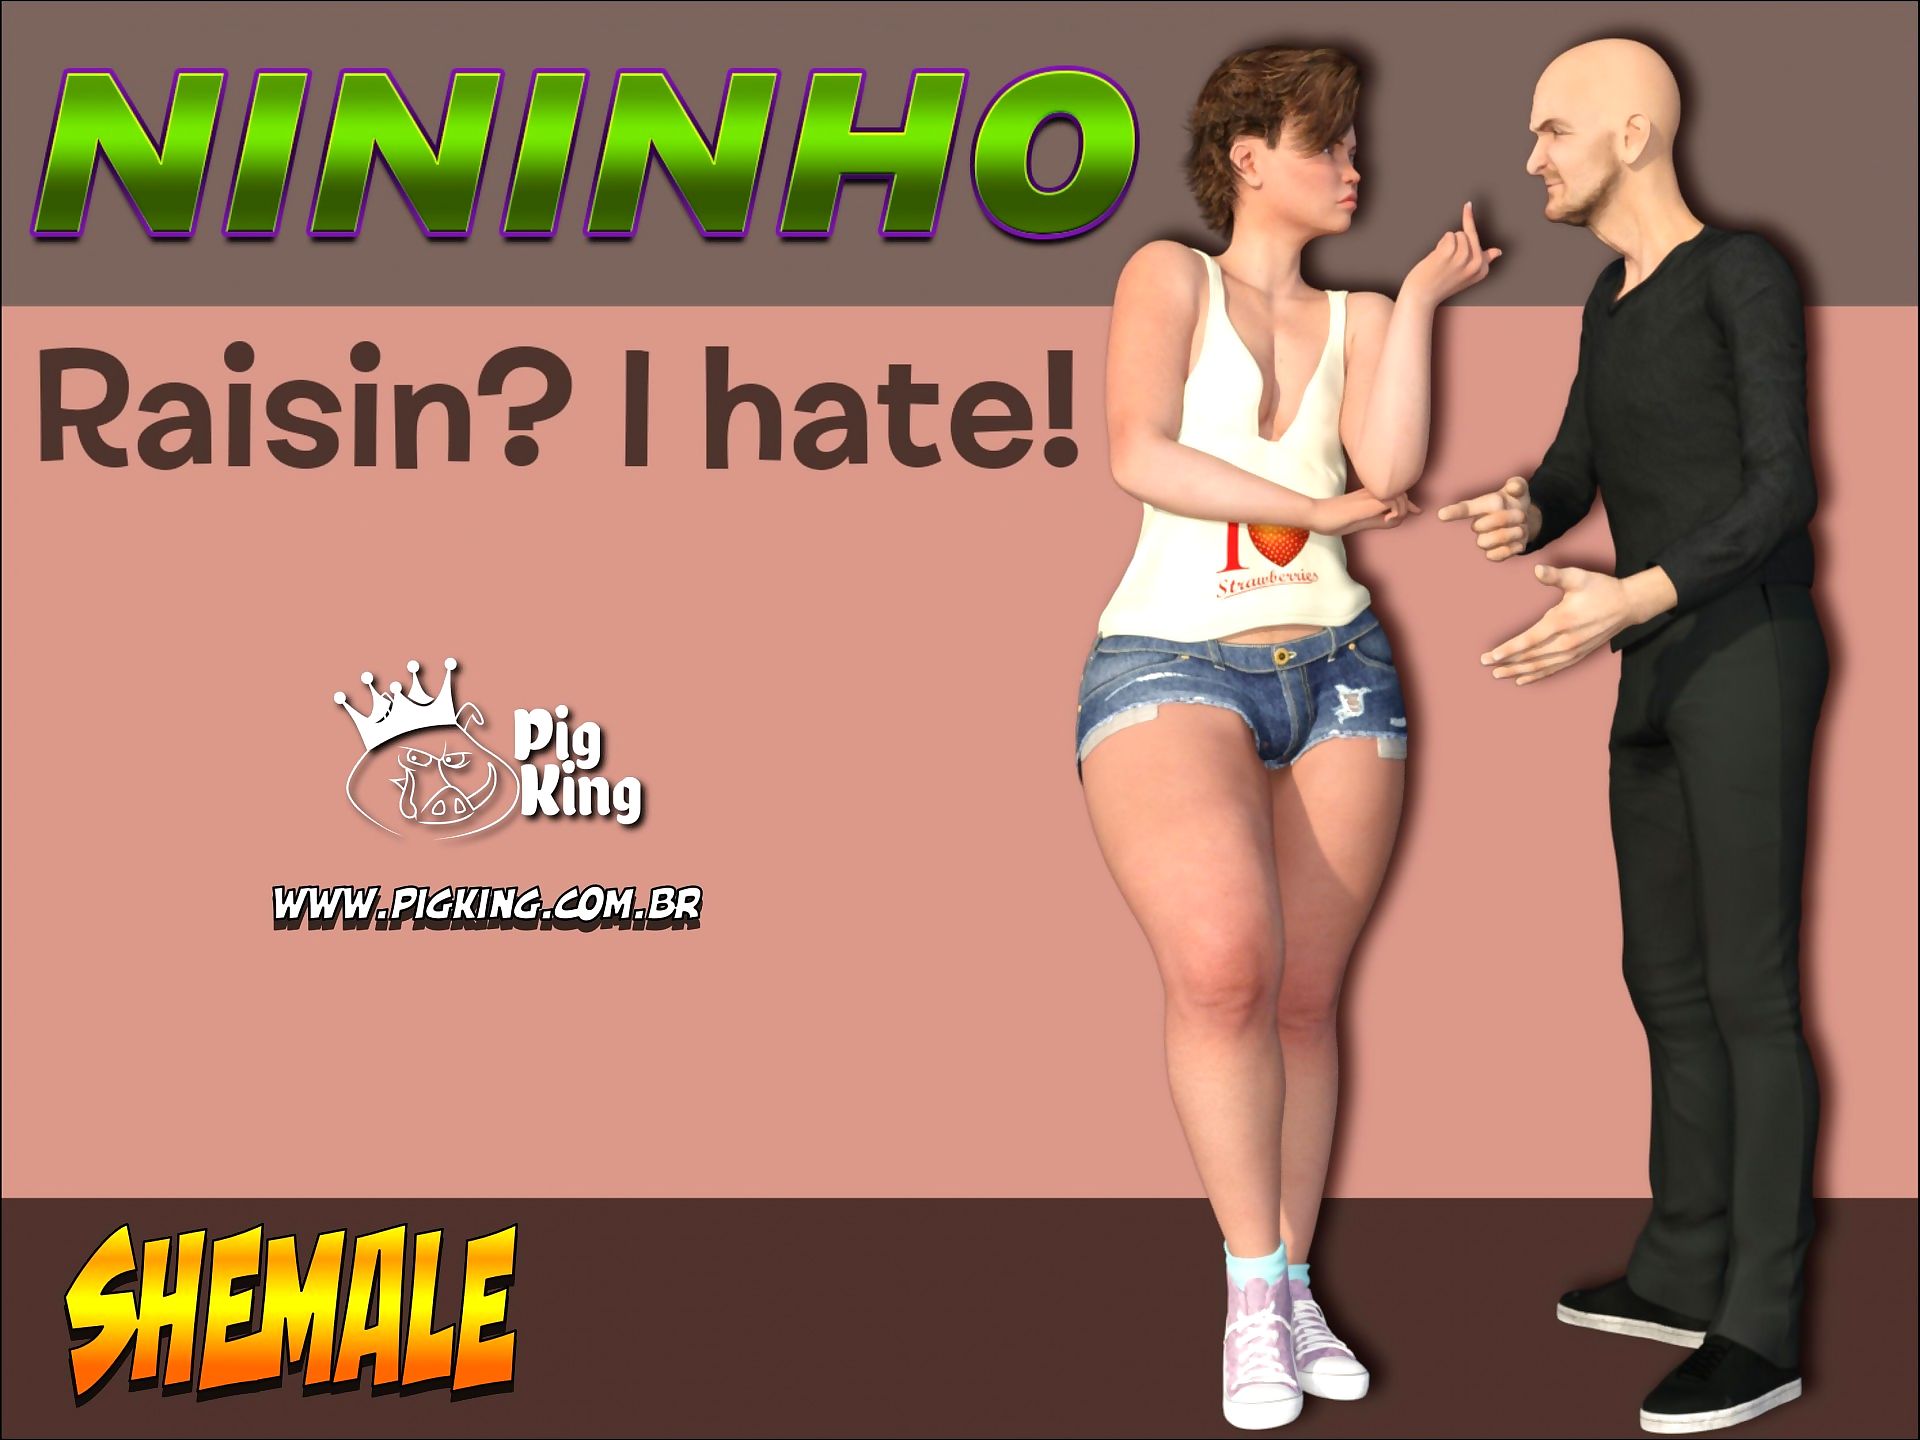 PigKing- Nininho Raisin? I Hate! page 1